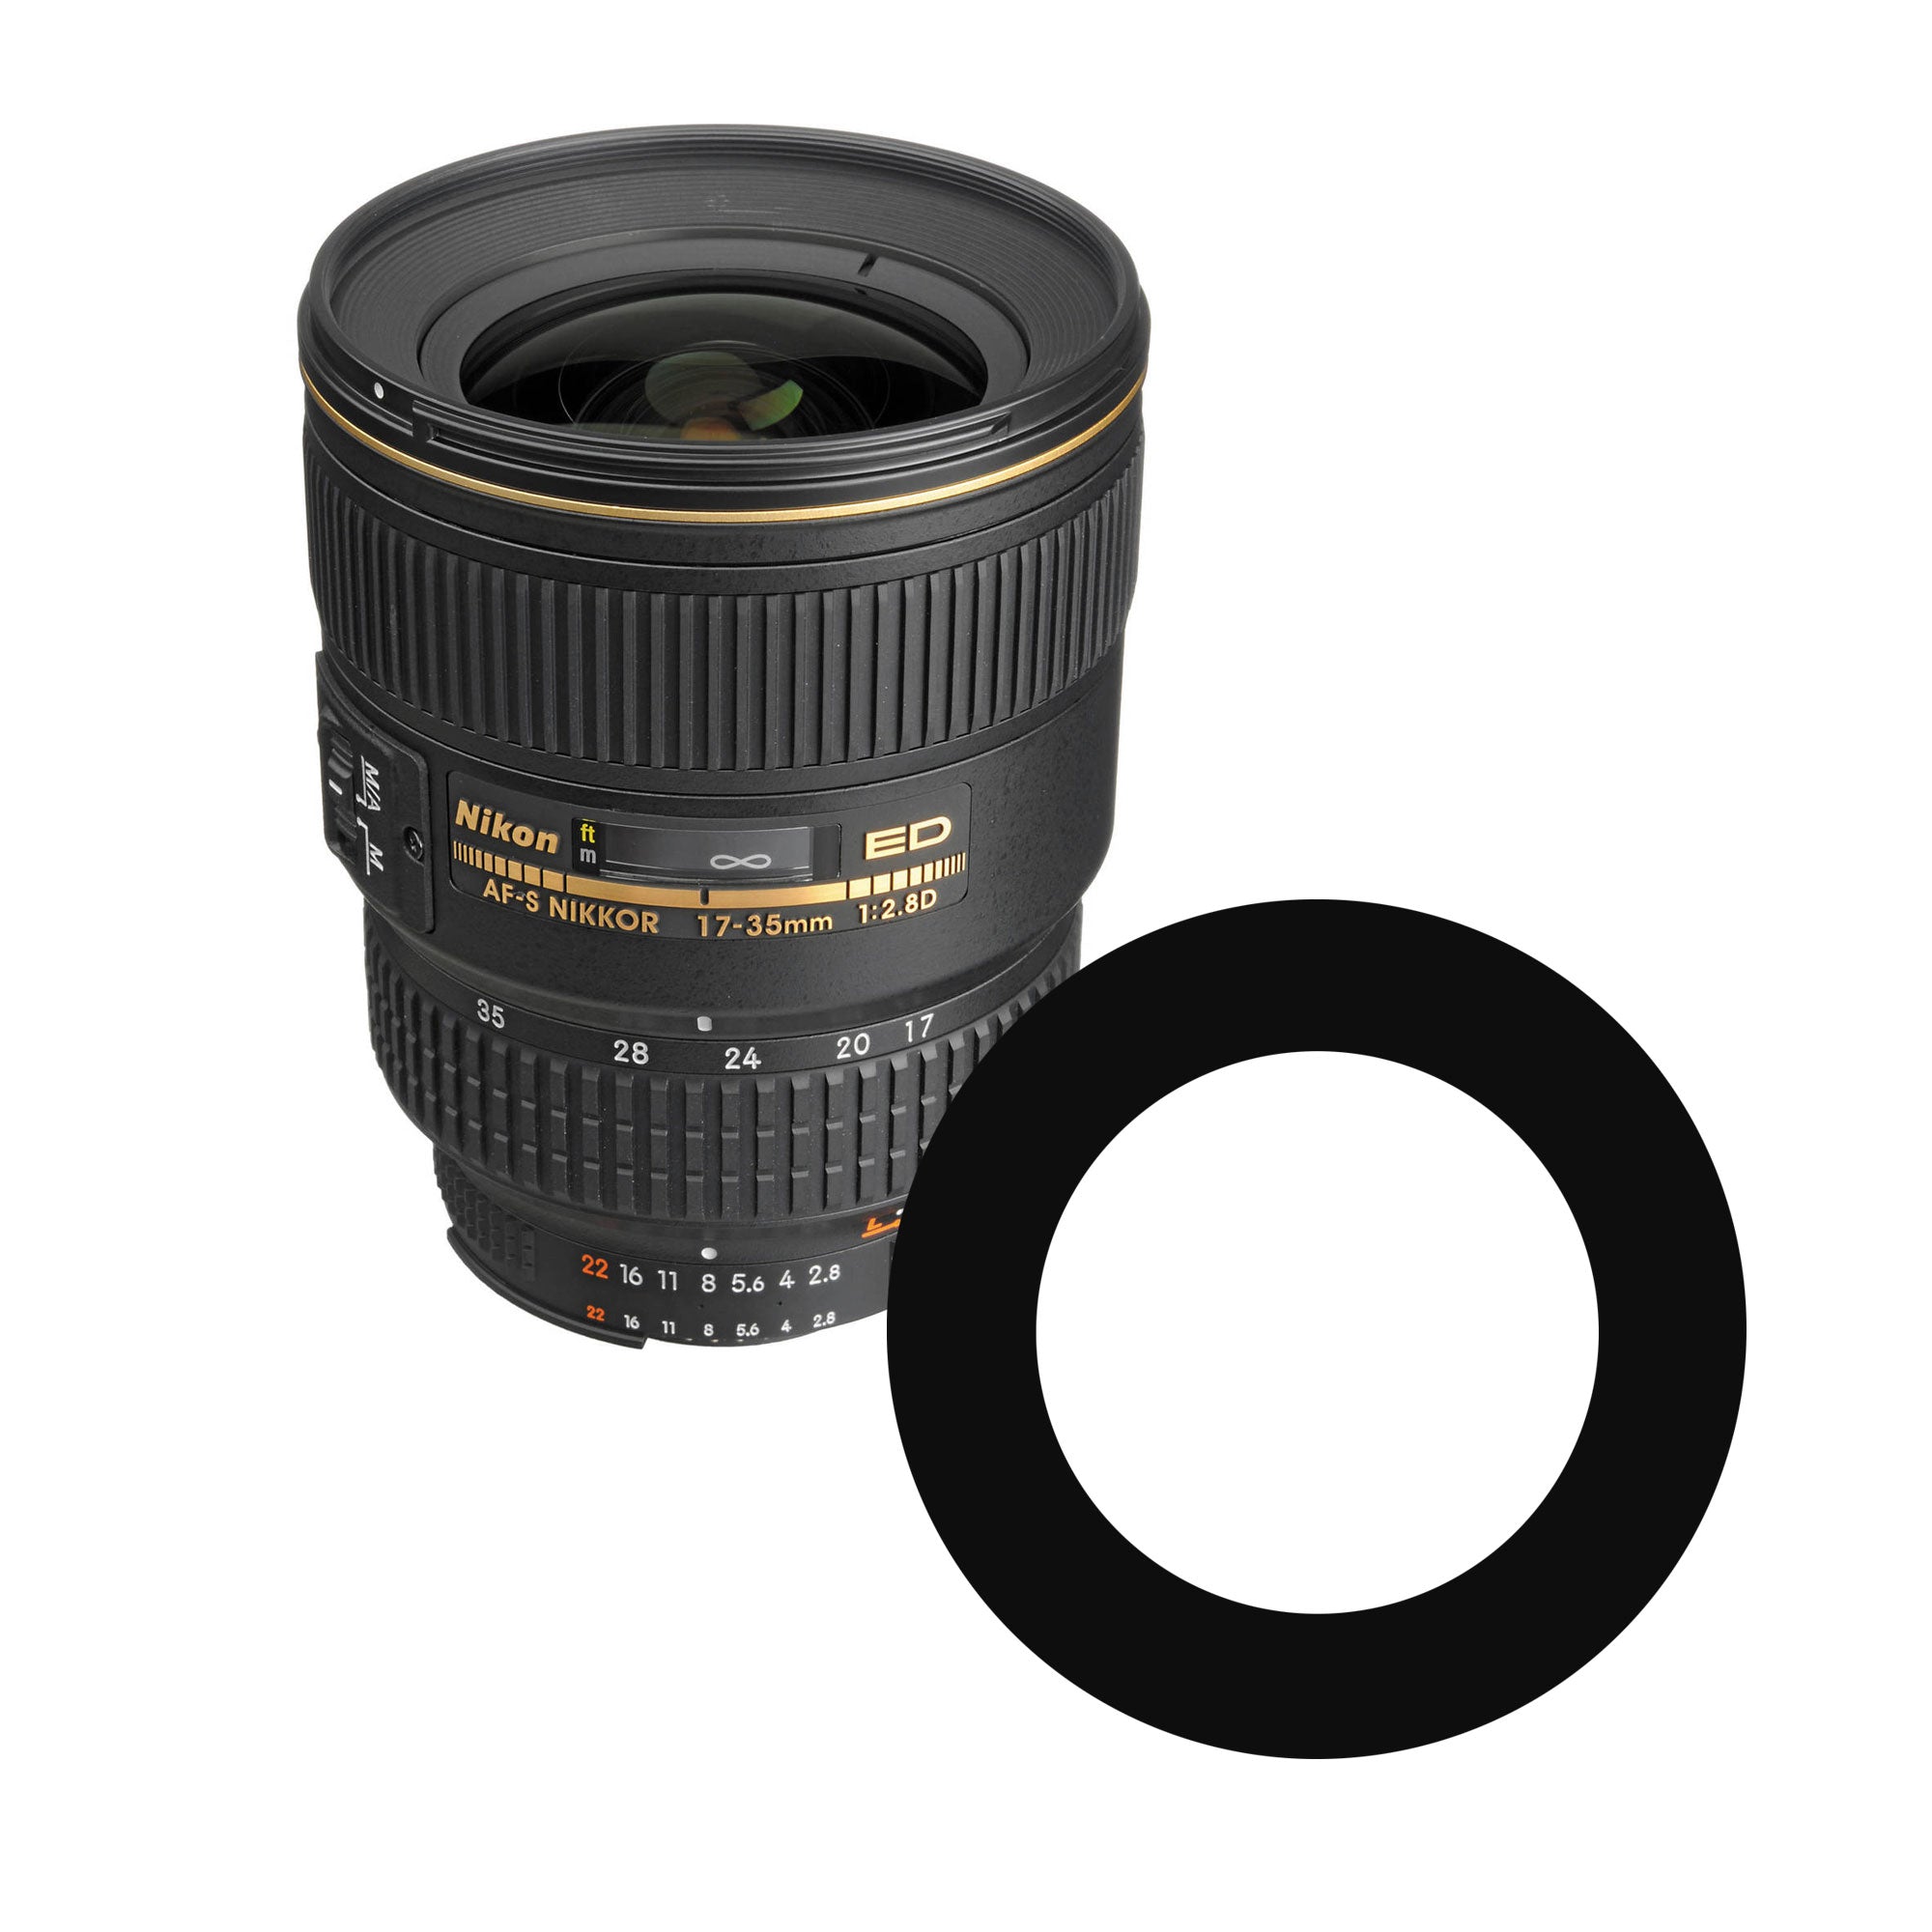 Anti-Reflection Ring for Nikon NIKKOR 17-35mm f/2.8D Lens